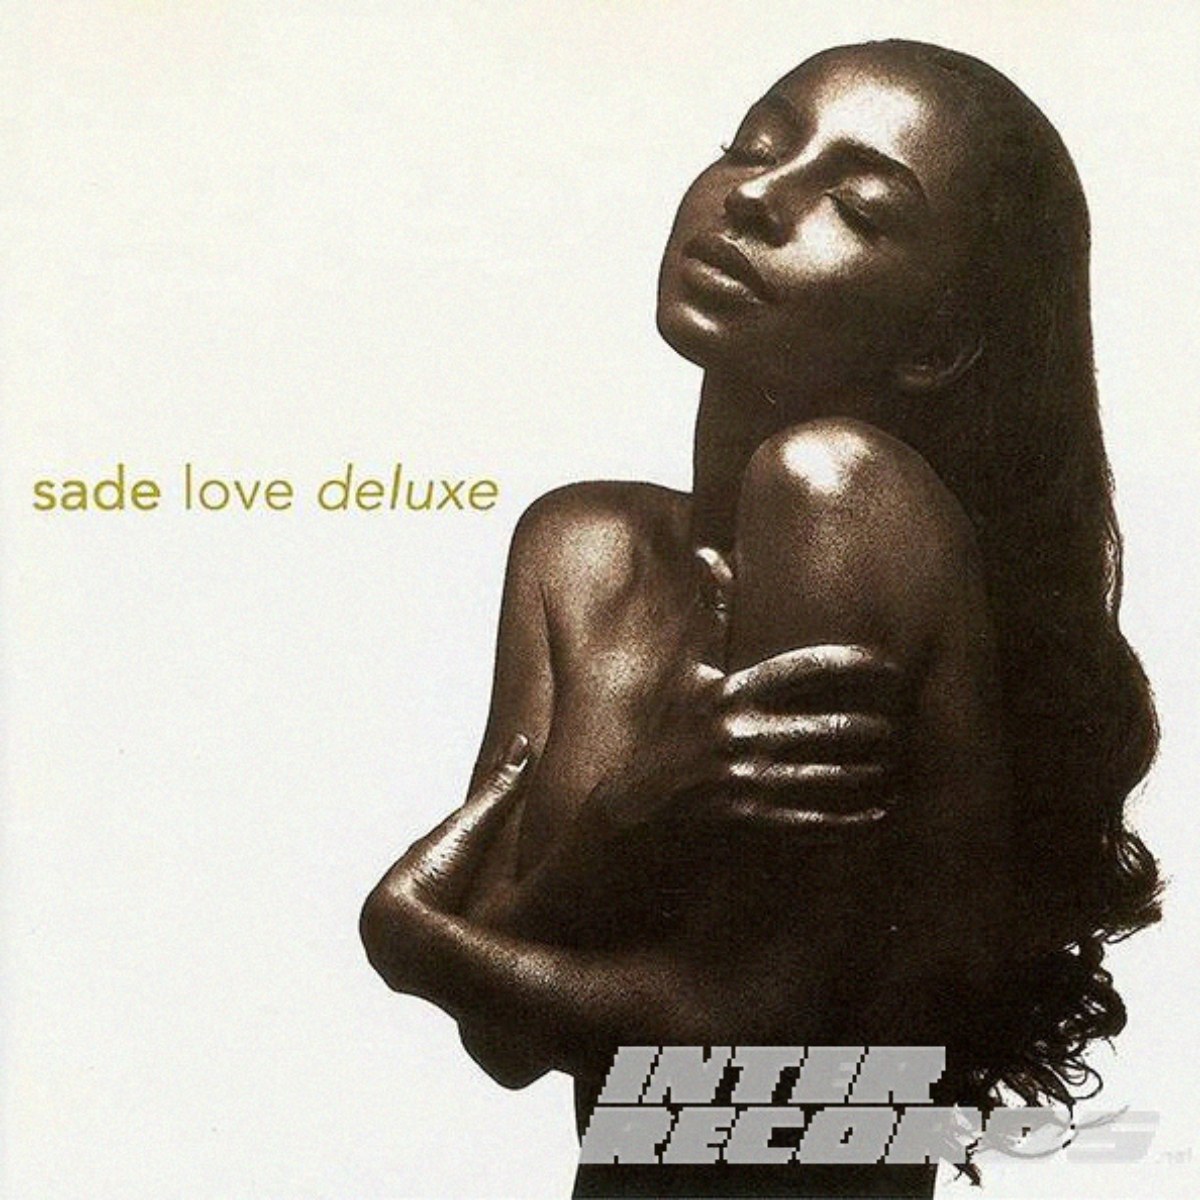 Love Deluxe (Sade album)